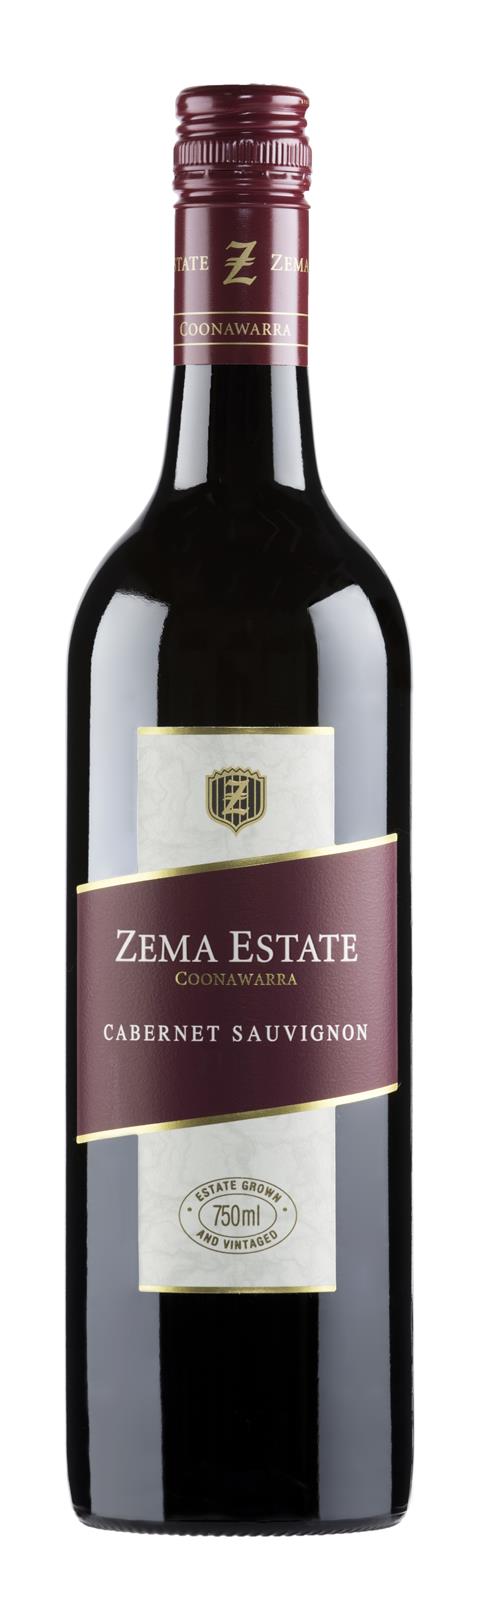 Zema Estate Cabernet Sauvignon 2014 (Australia)